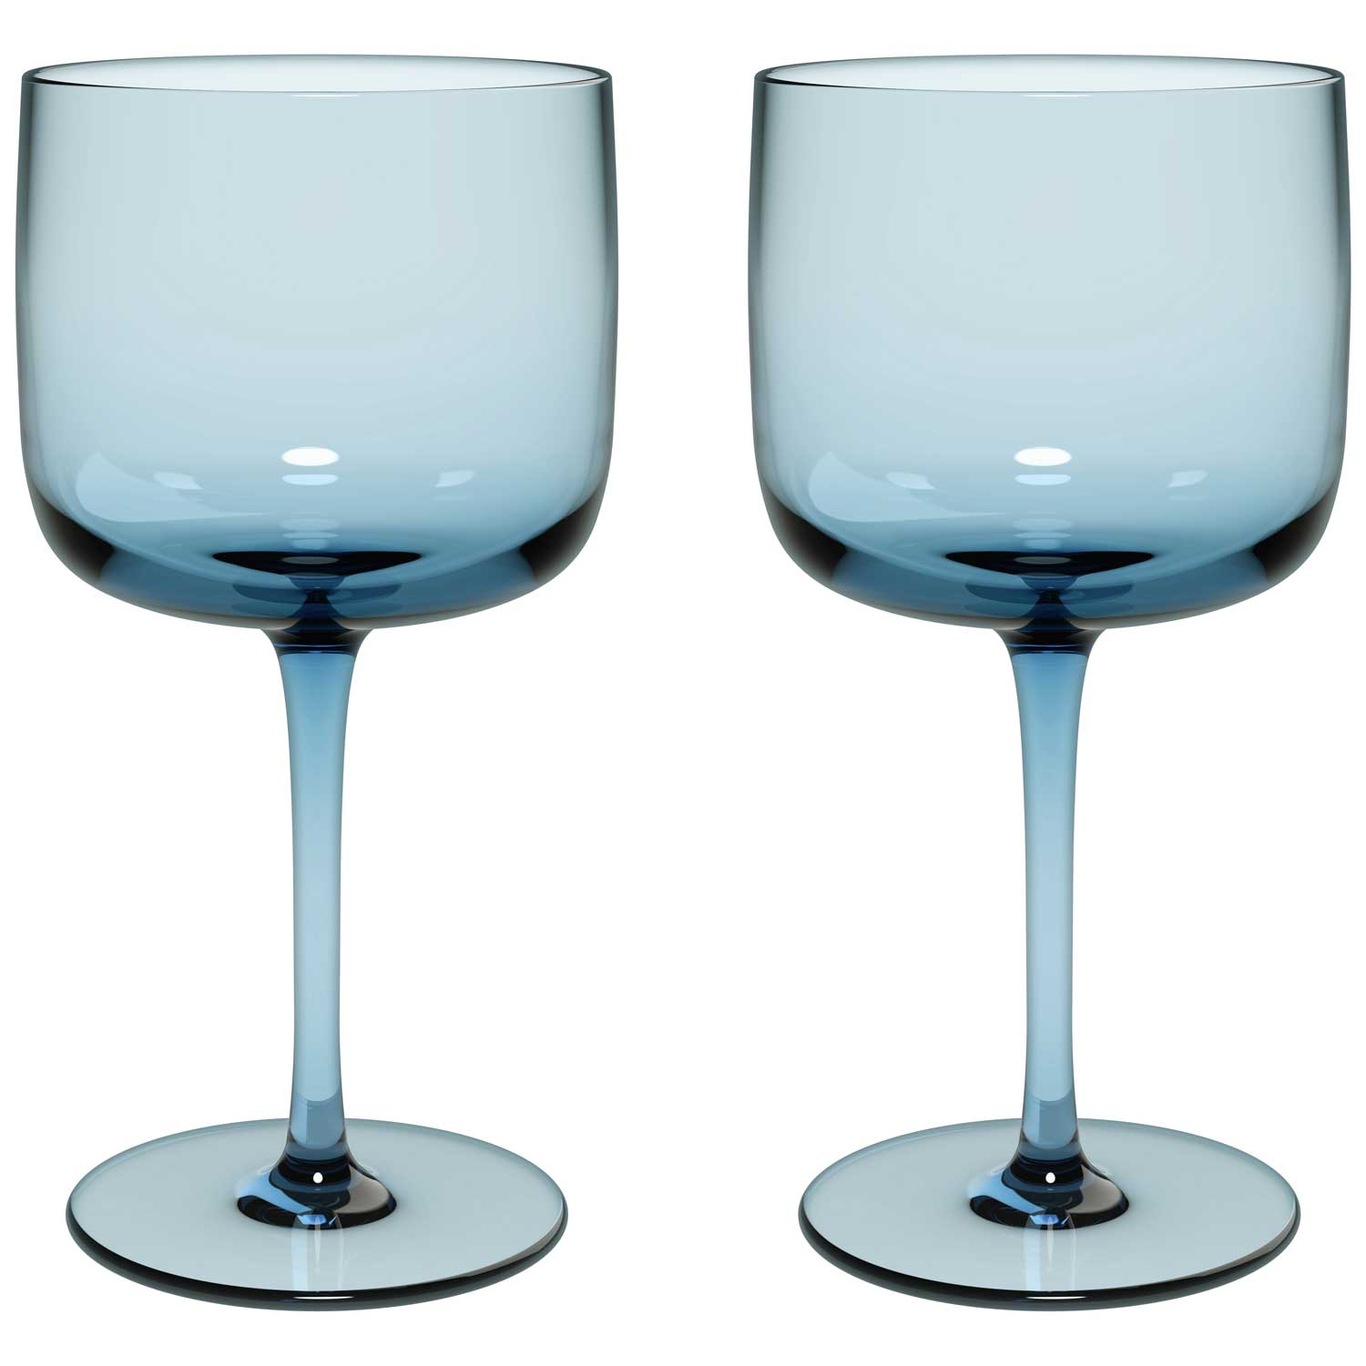 https://royaldesign.com/image/2/villeroy-boch-like-wine-glasses-2-pack-26?w=800&quality=80